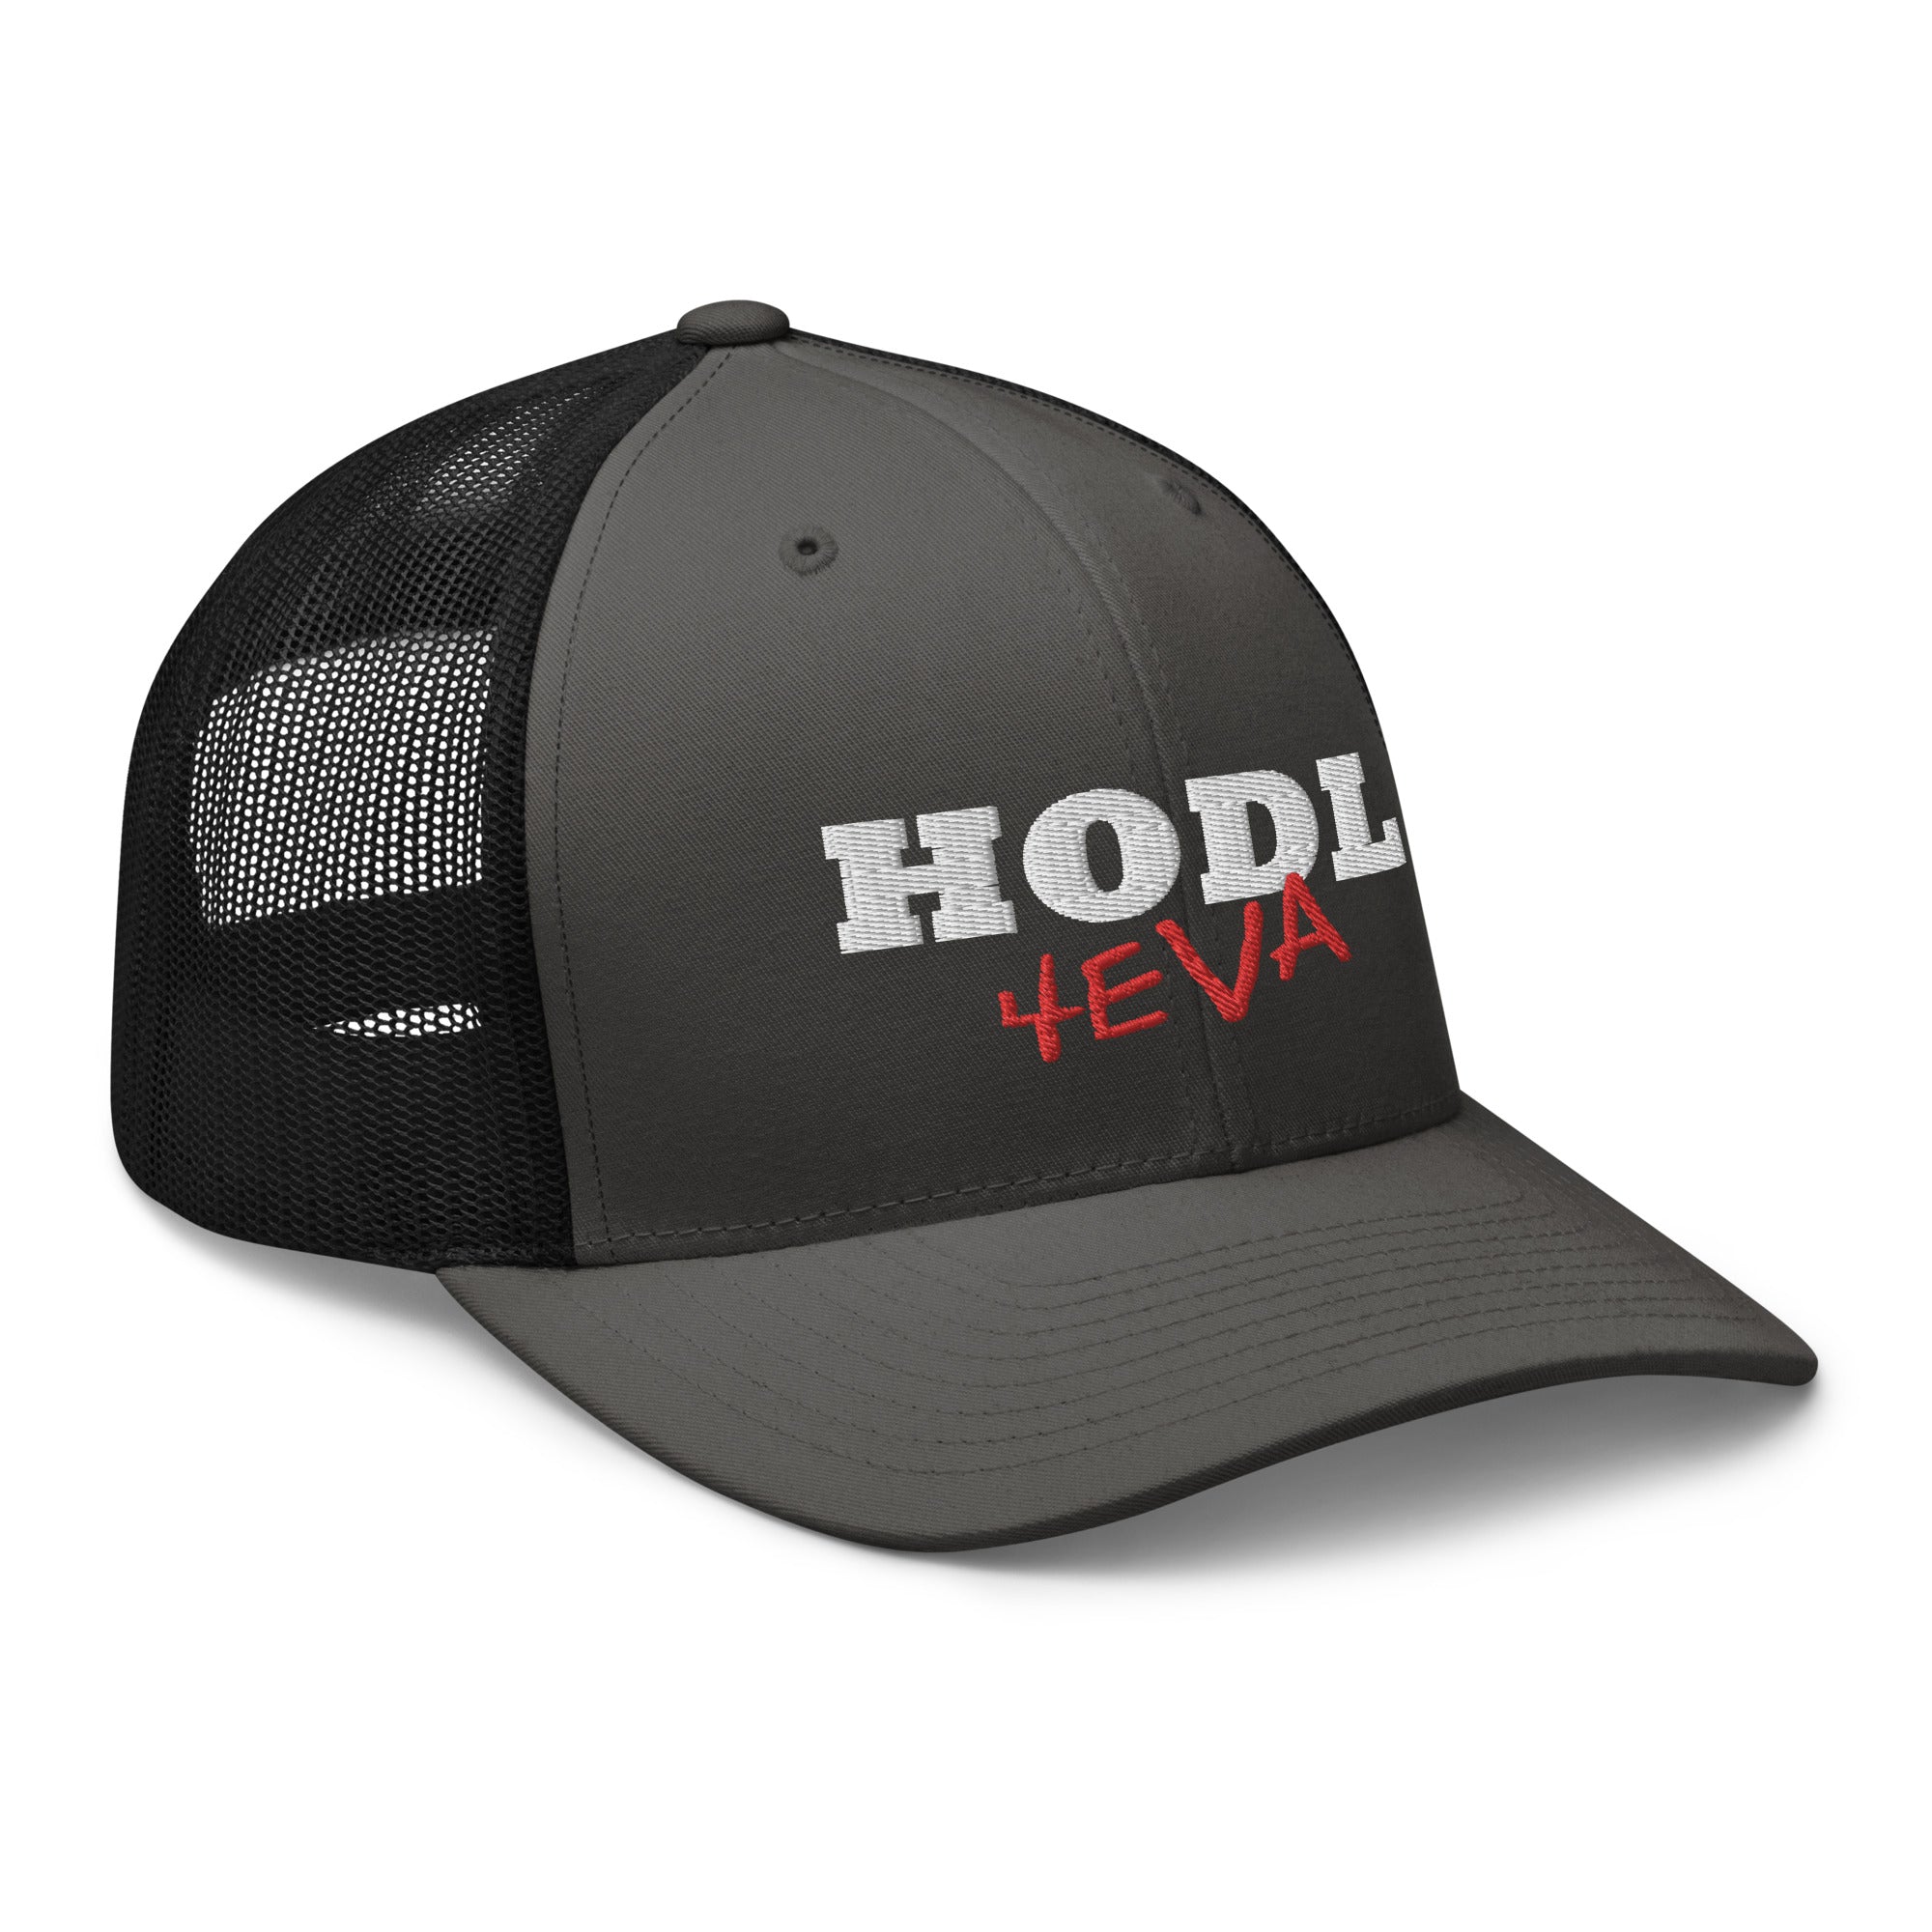 HODL Diamond Hands Your Crypto 4Eva Bitcoin Ethereum Trucker Cap Snapback Hat